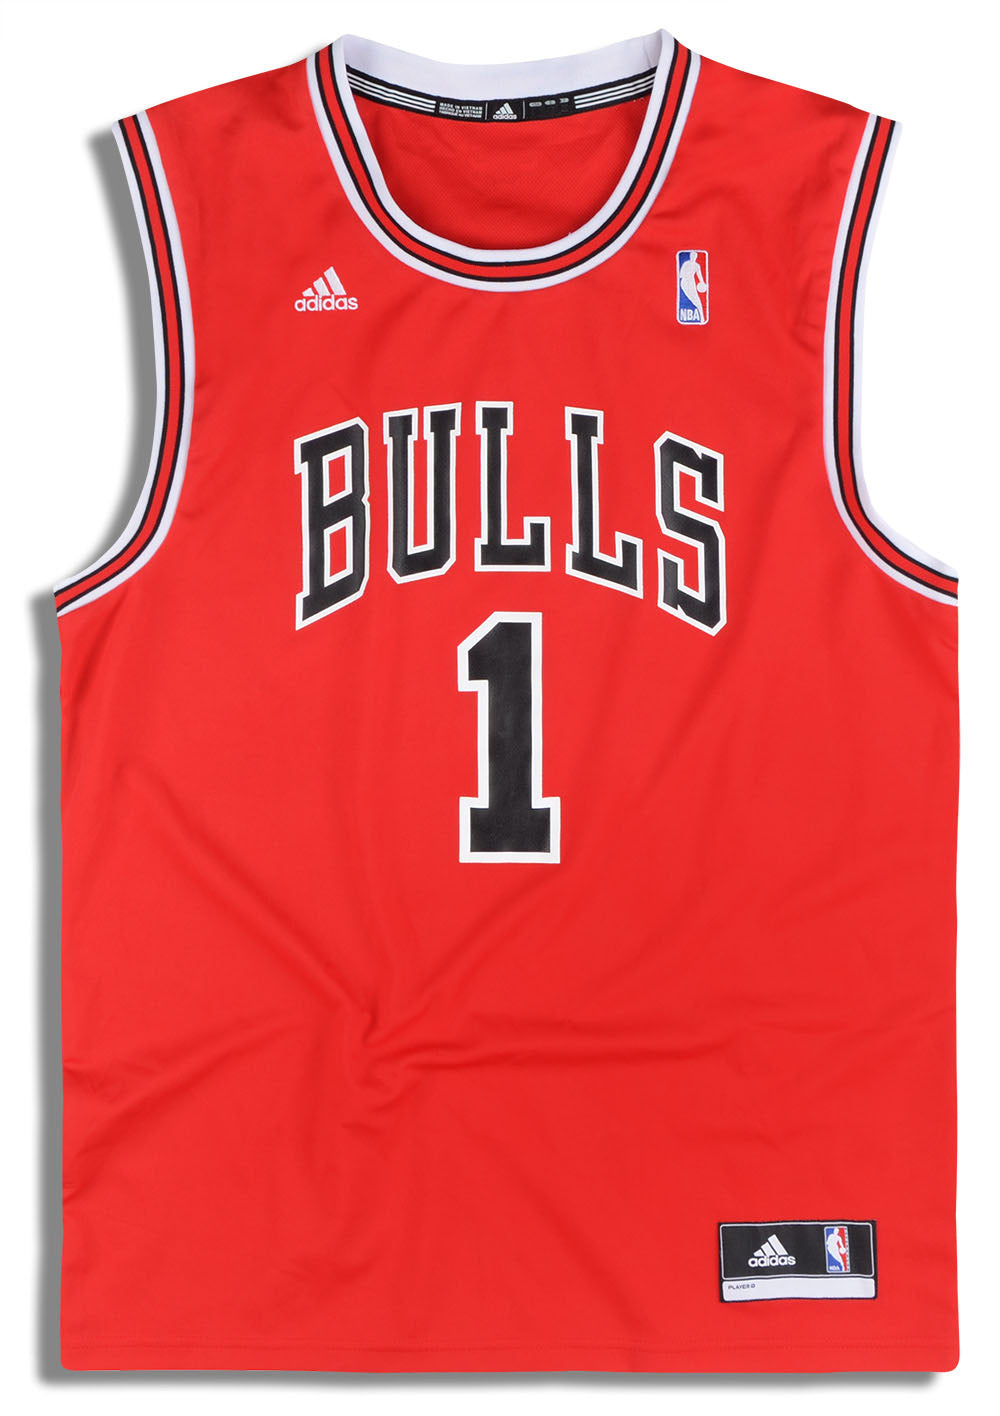 Chicago Bulls retro jersey - Jerseyland